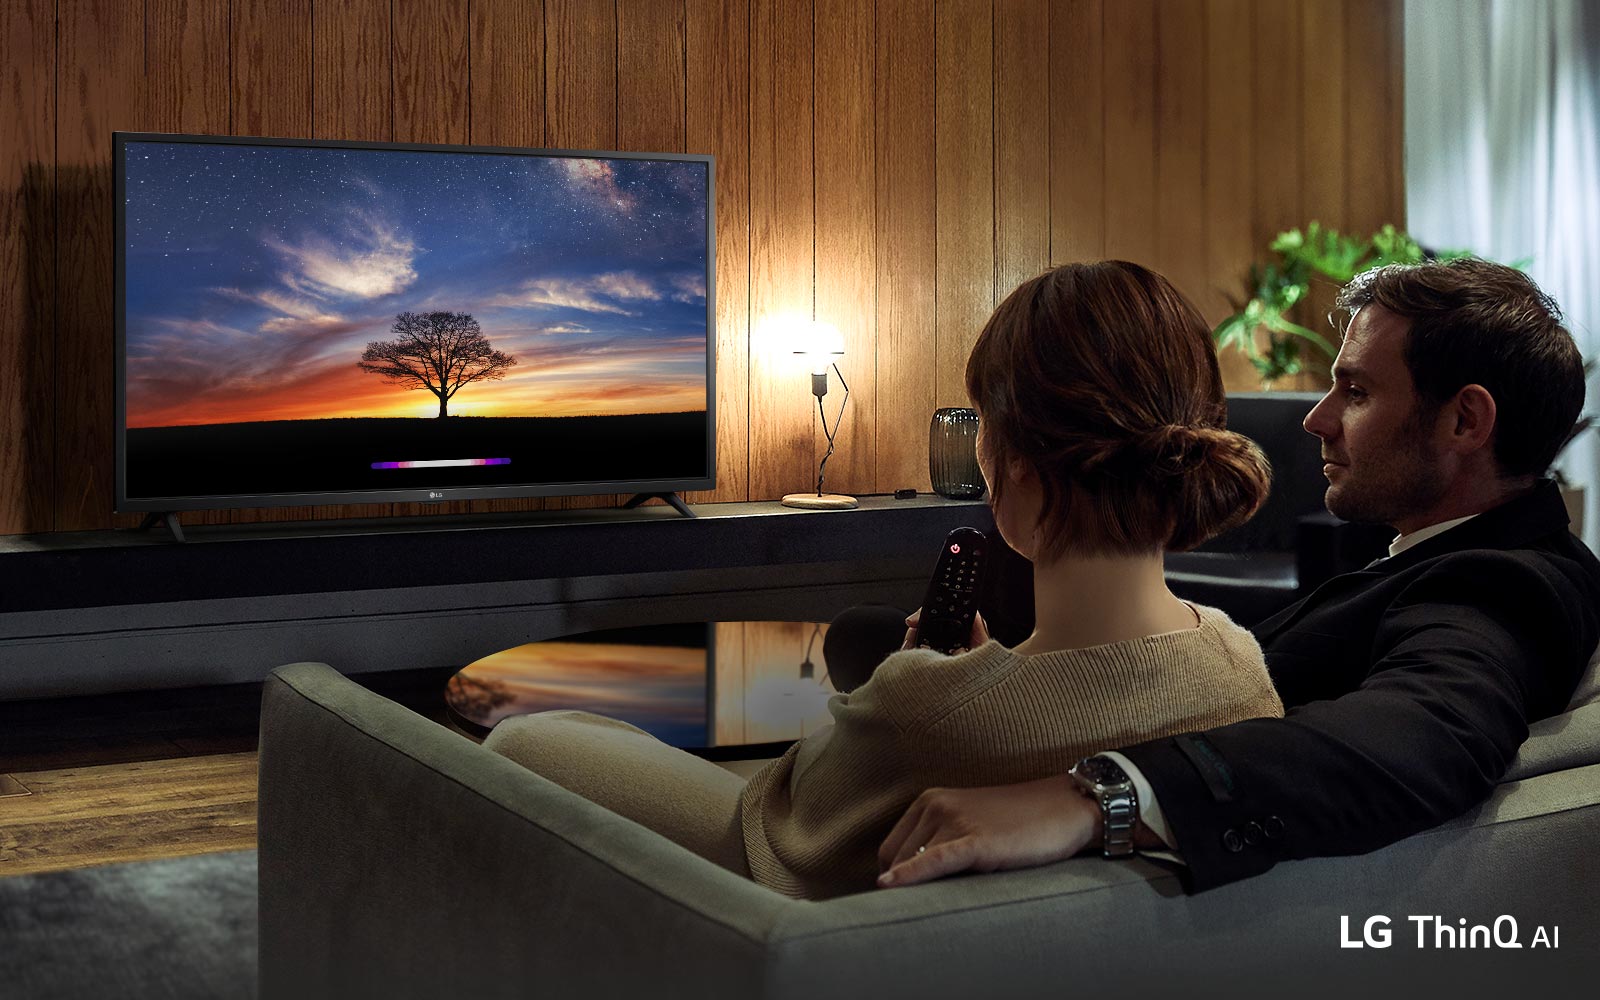 LG 32LF630V - Televisor LED Full HD 32 Pulgadas Smart Tv WiFi